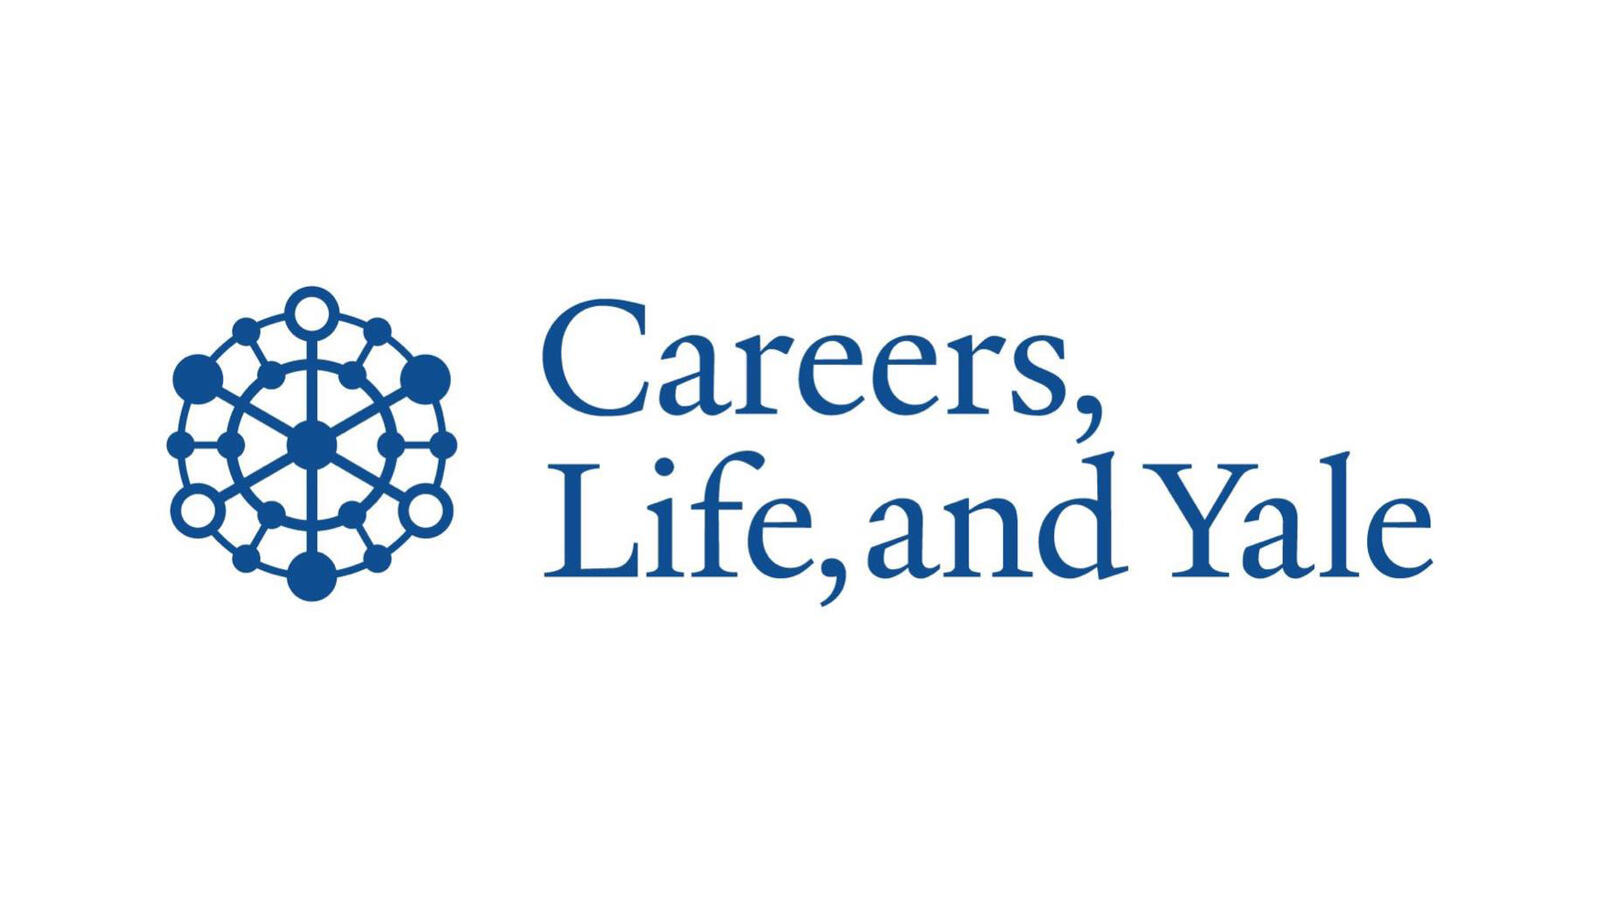 Careers, Life, and Yale logo